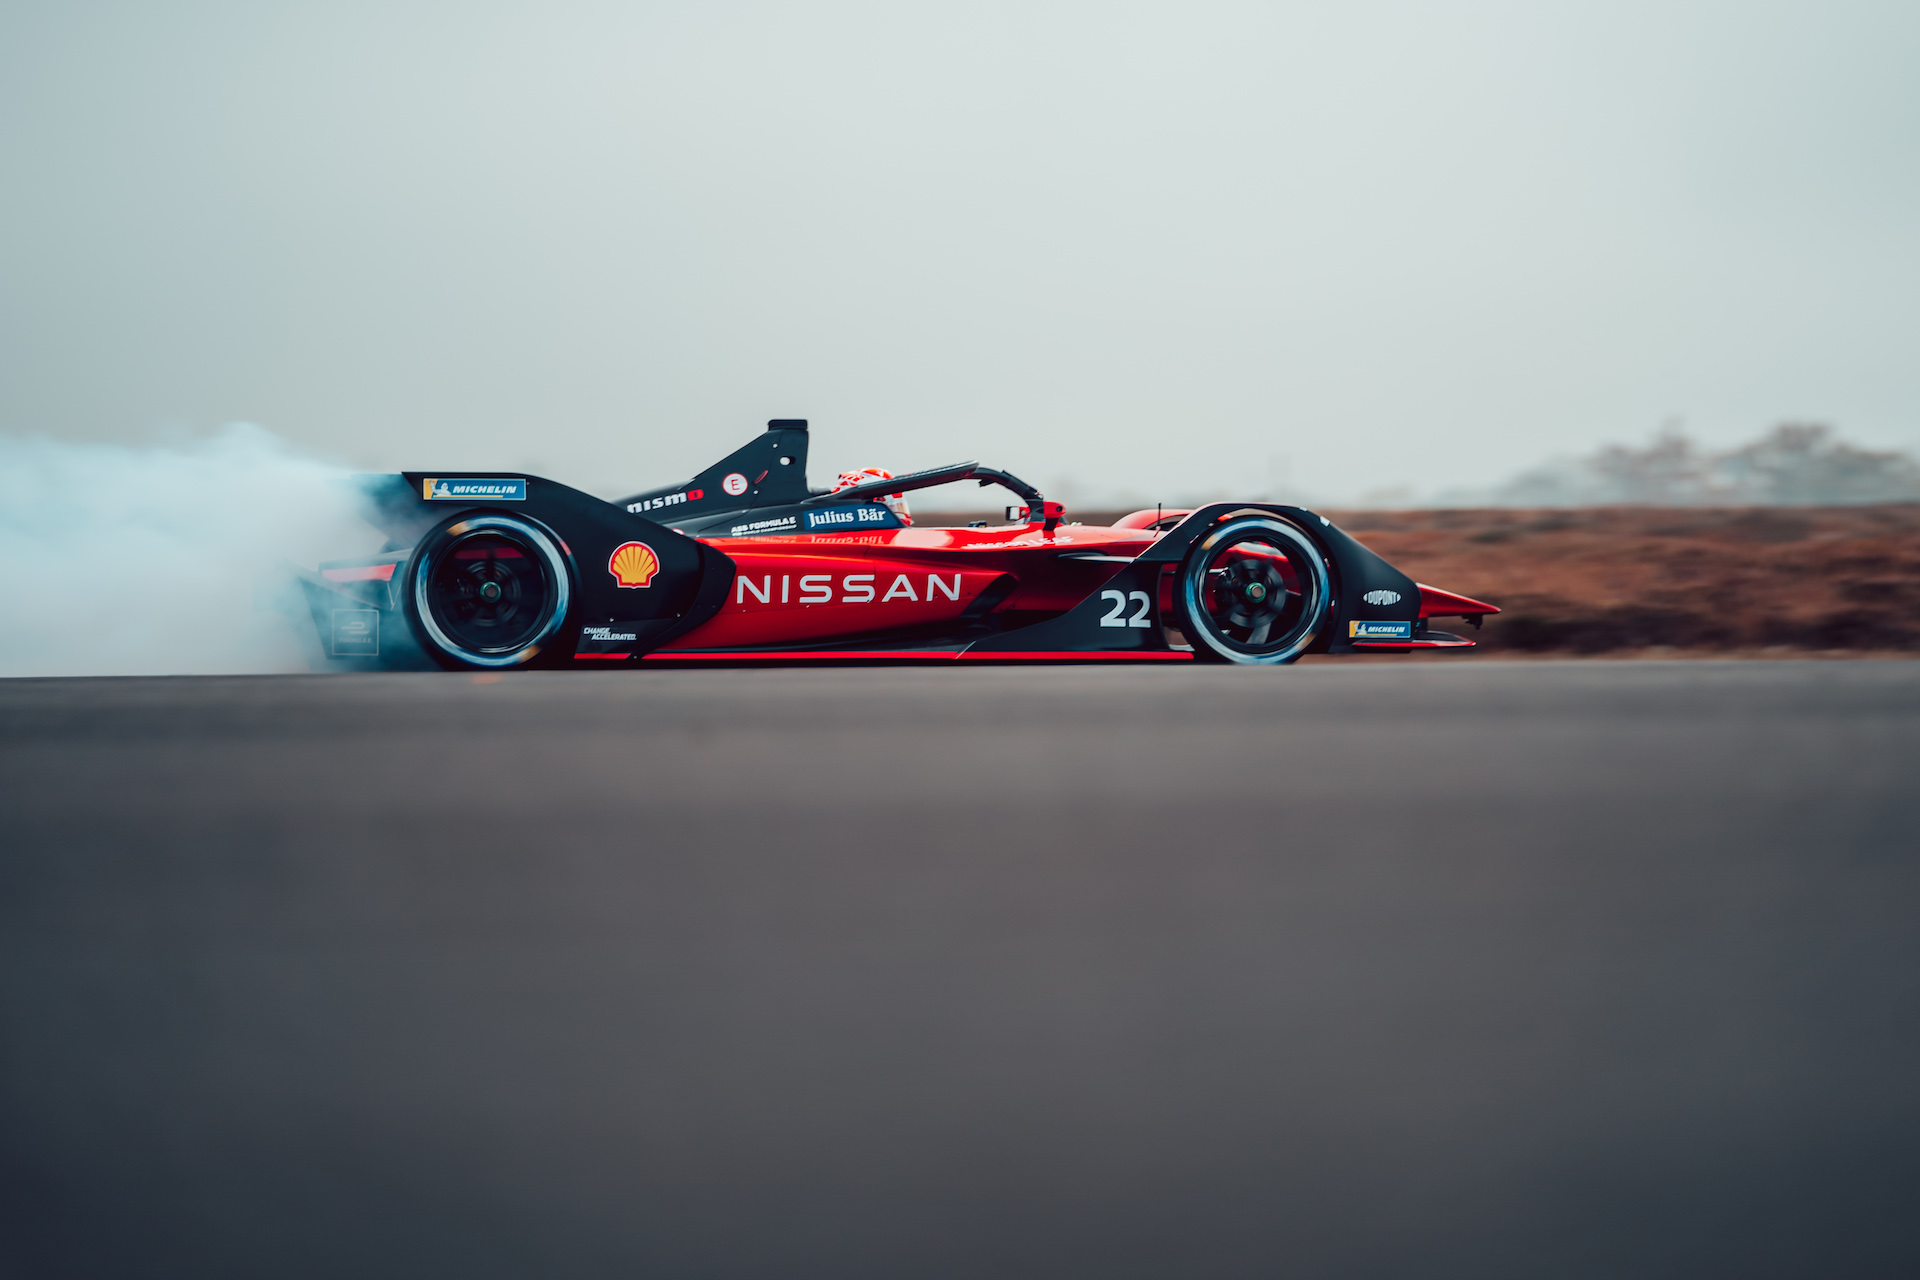 Nissan-IM03-2022-FE-Racing-Car